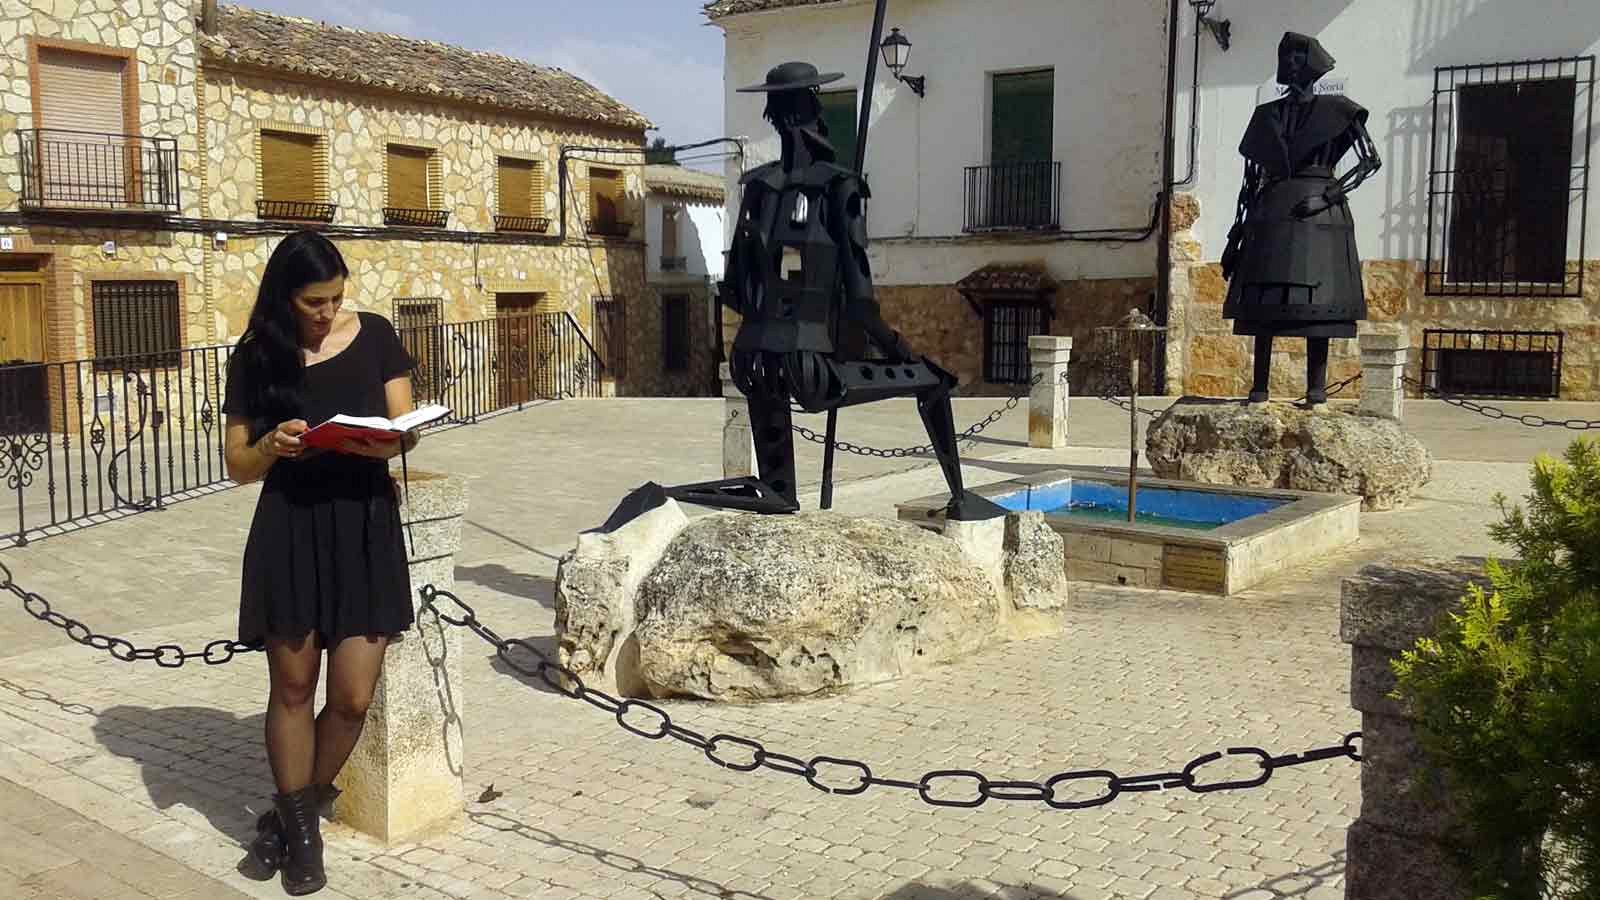 La mitad invisible - Don Quijote de La Mancha, de Miguel de Cervantes - avance